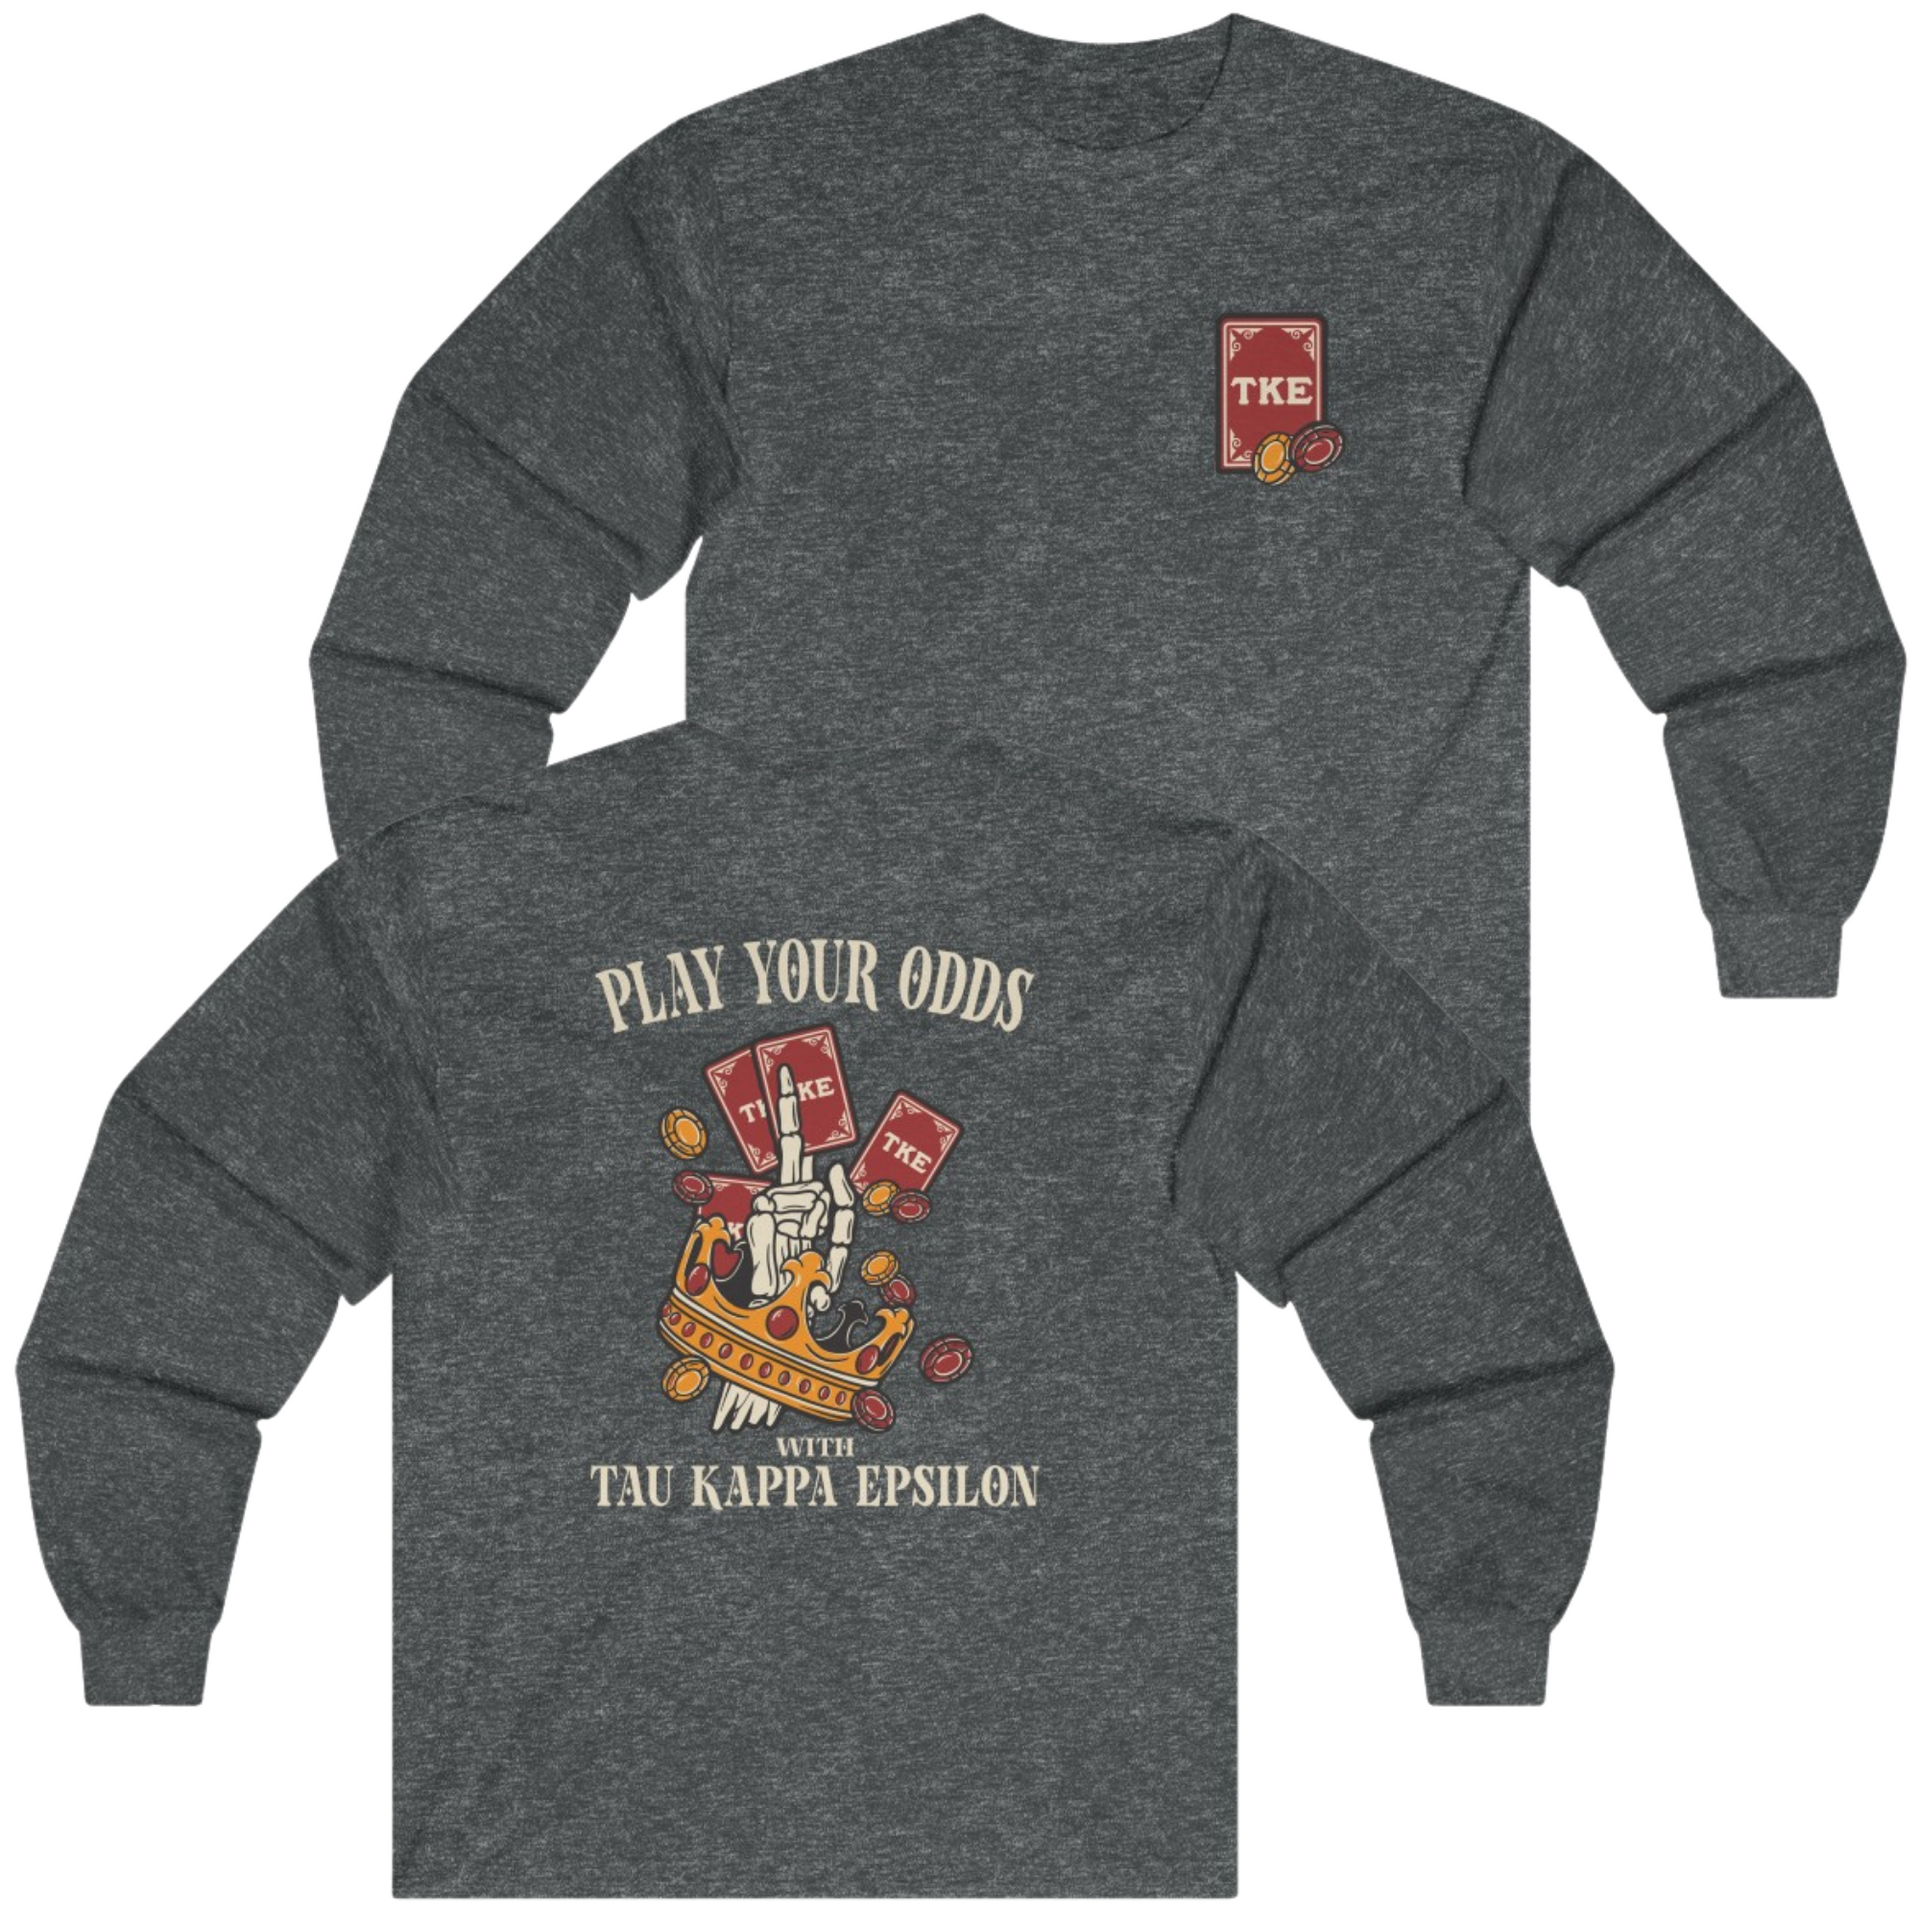 Grey Tau Kappa Epsilon Graphic Long Sleeve T-Shirt | Play Your Odds | Tau Kappa Epsilon Fraternity